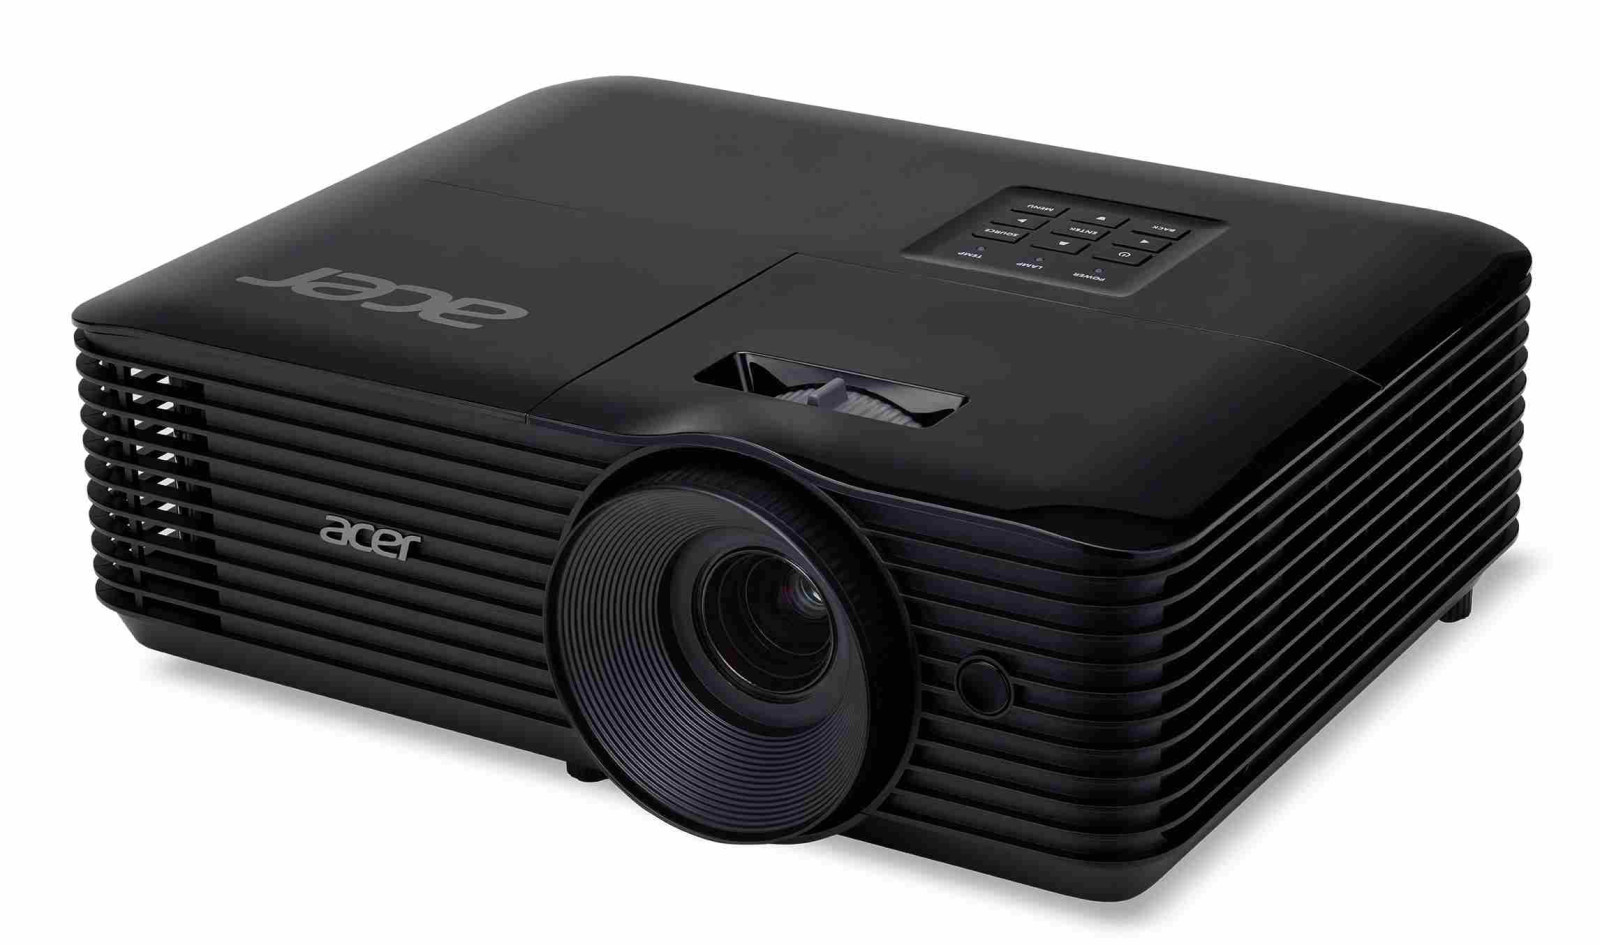 ACER projektor X1328WH, DLP 3D, WXGA, 4500Lm, 20000/1, HDMI, 2,7 kg, Euro Power EMEA